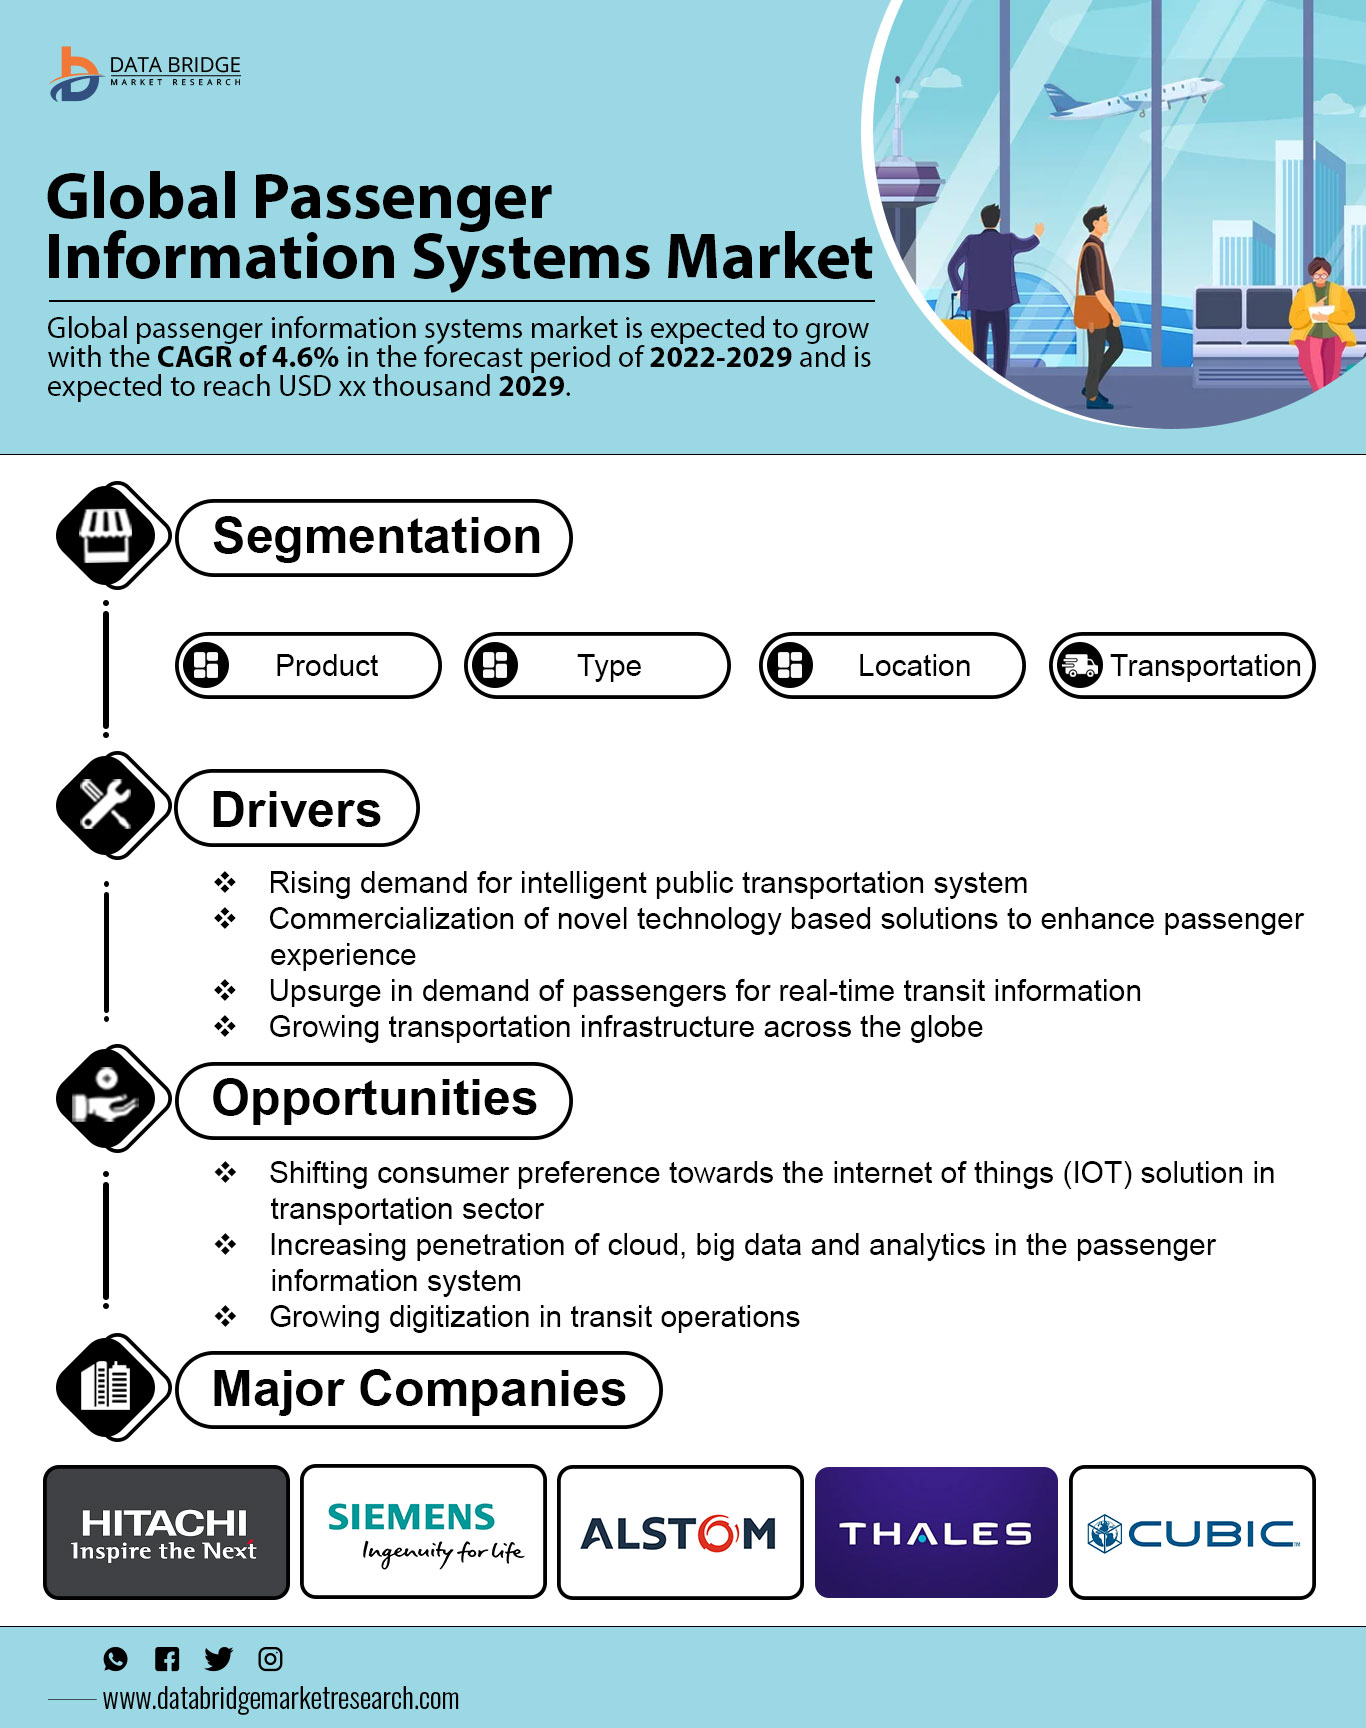 Passenger Information System Market